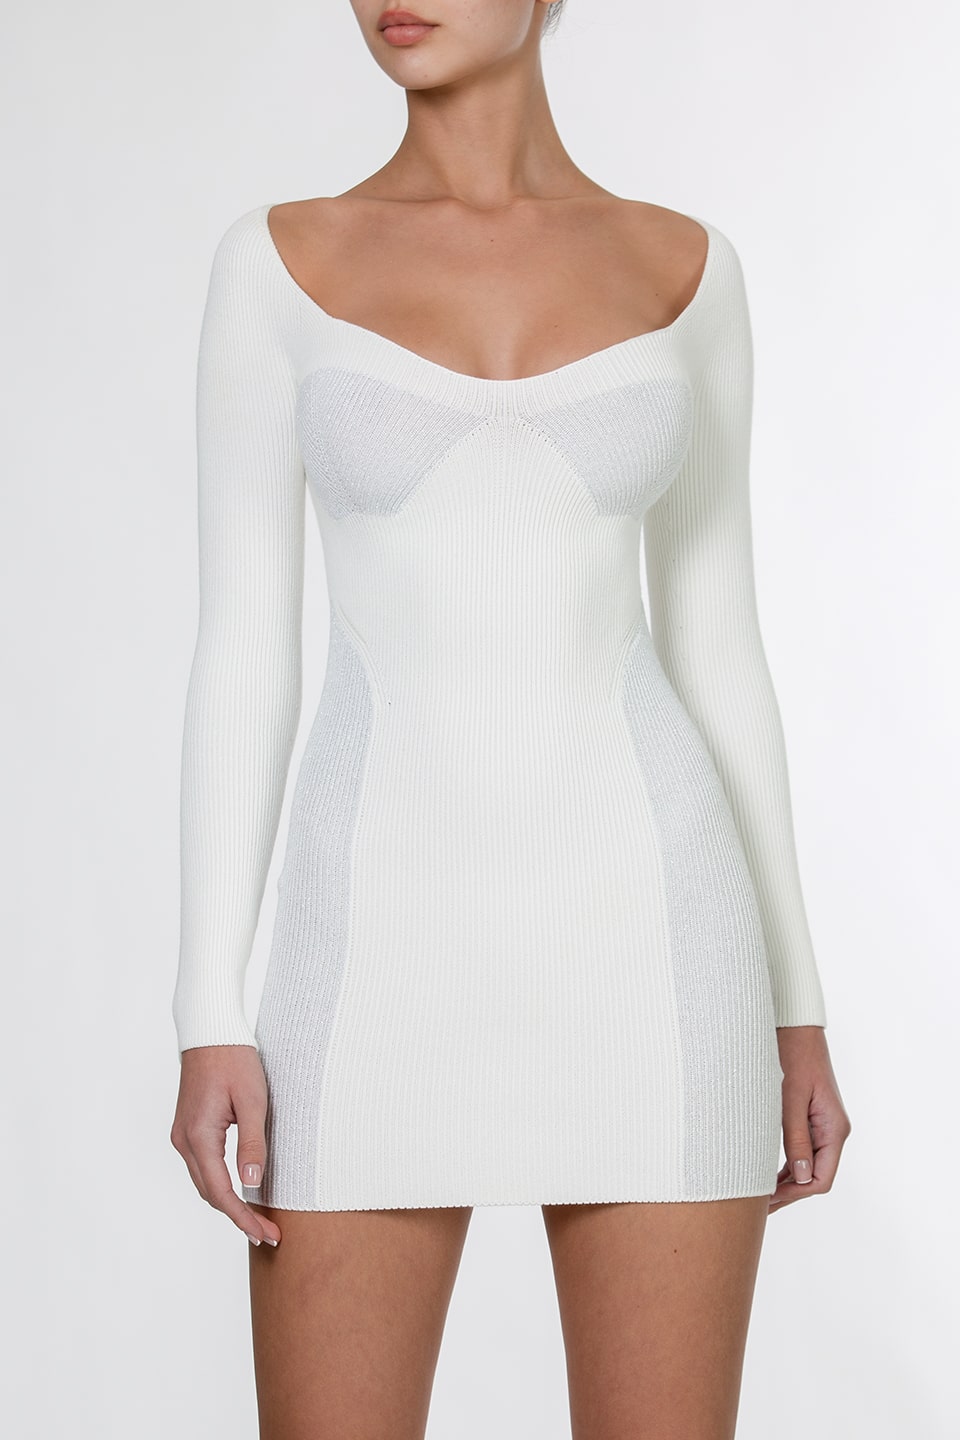 Shop online trendy White Mini dresses from Kukhareva London Fashion designer. Product gallery 1